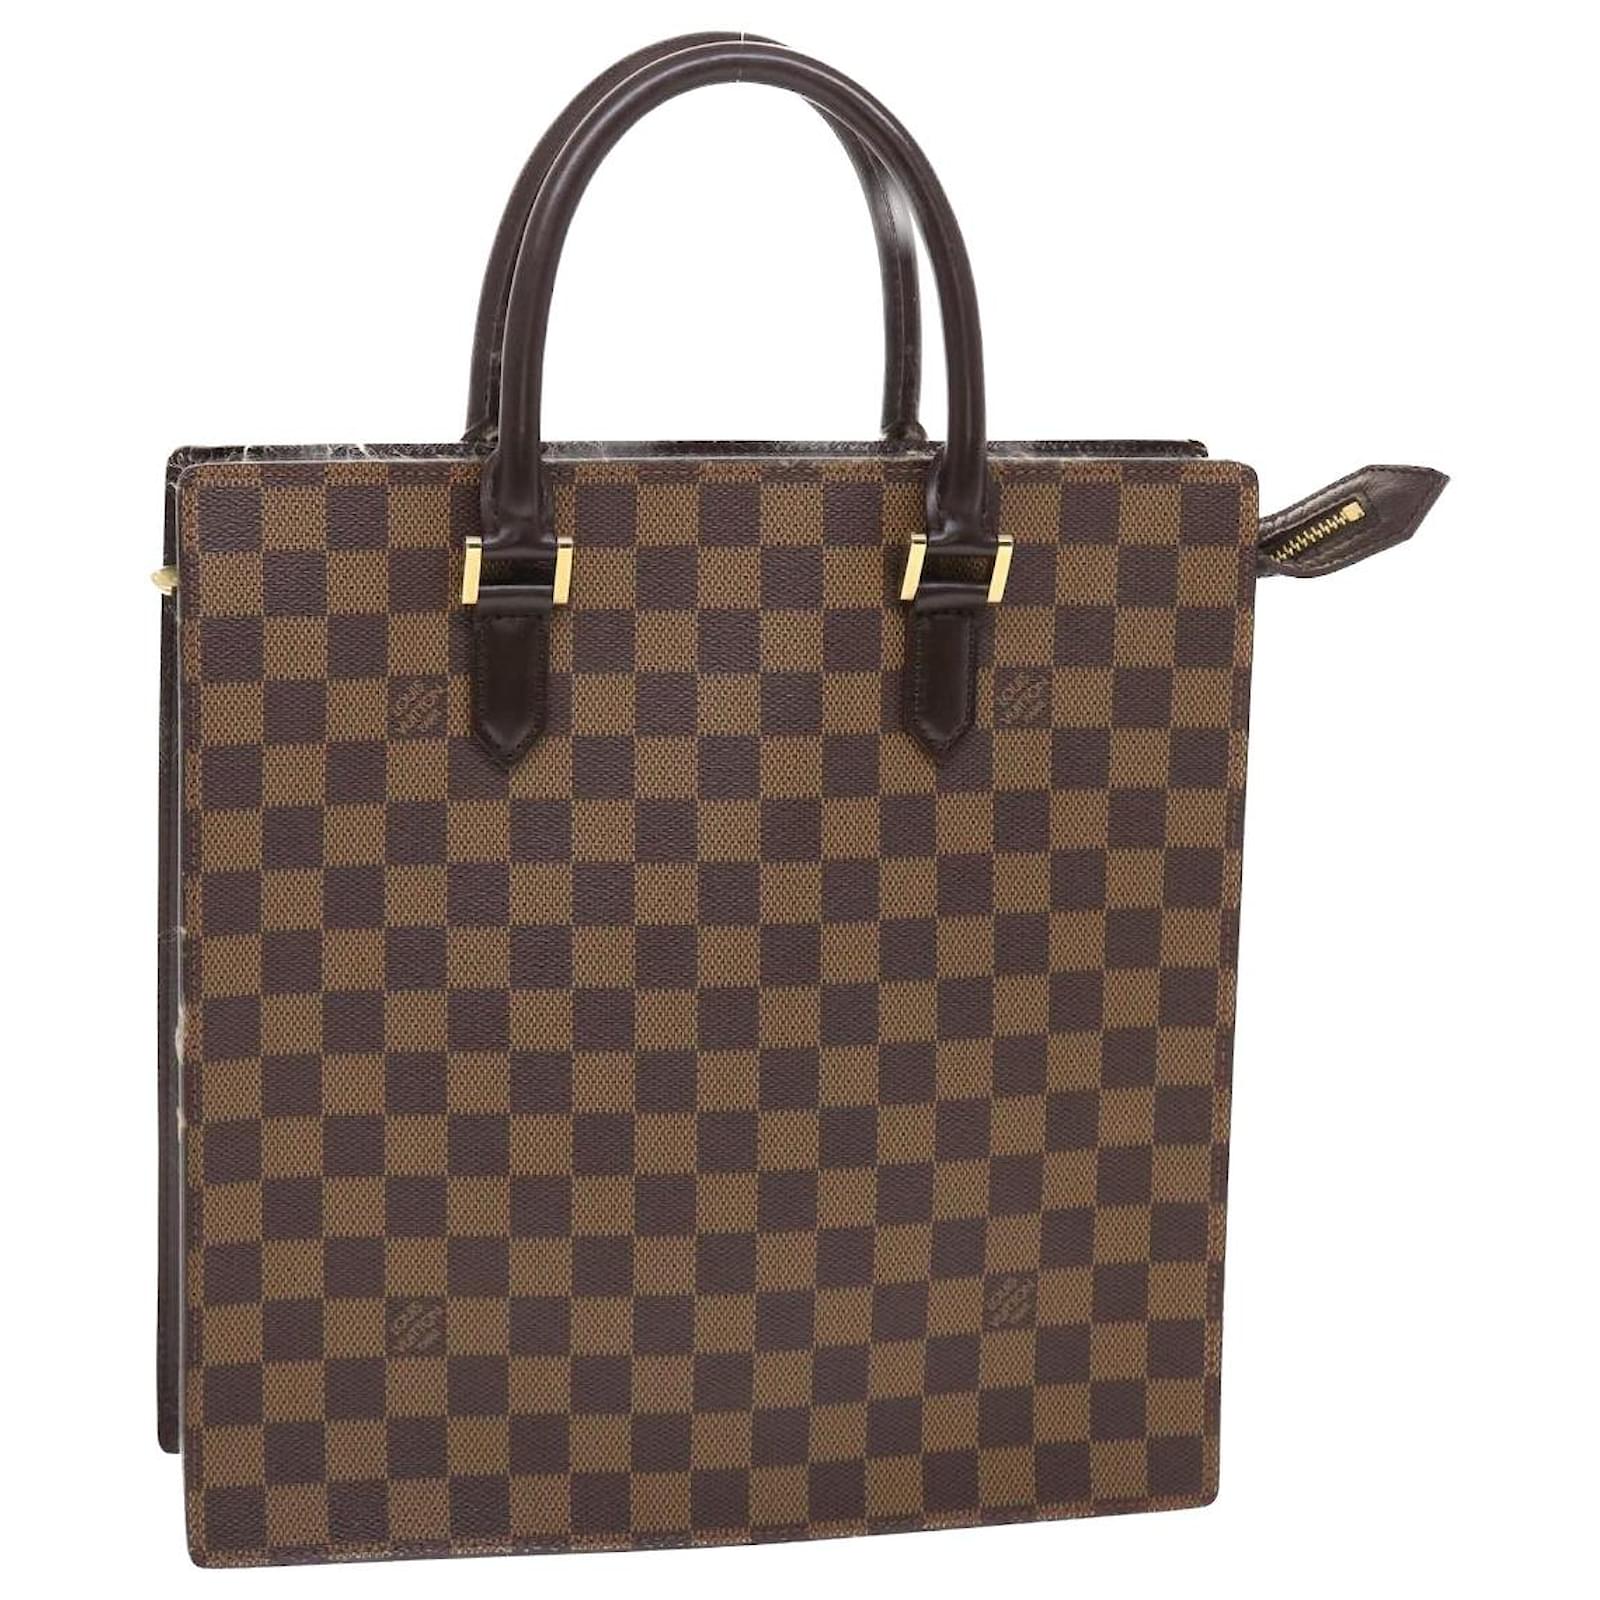 Louis Vuitton Venice Bag